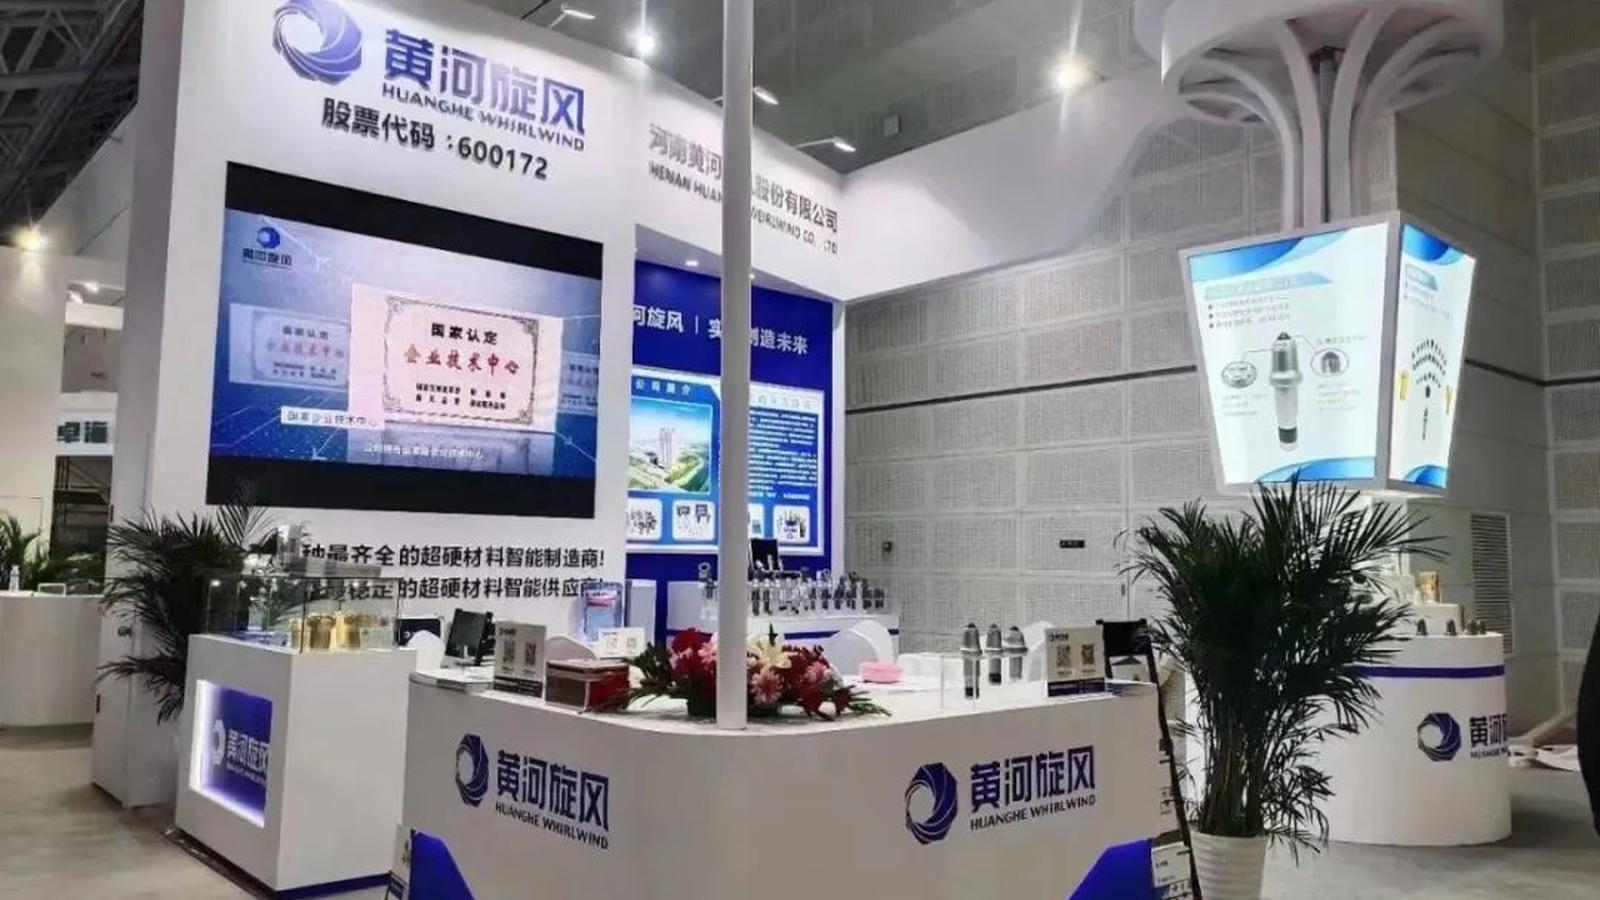 Huanghe Whirlwind-Manufacturer of Super-hard Materials